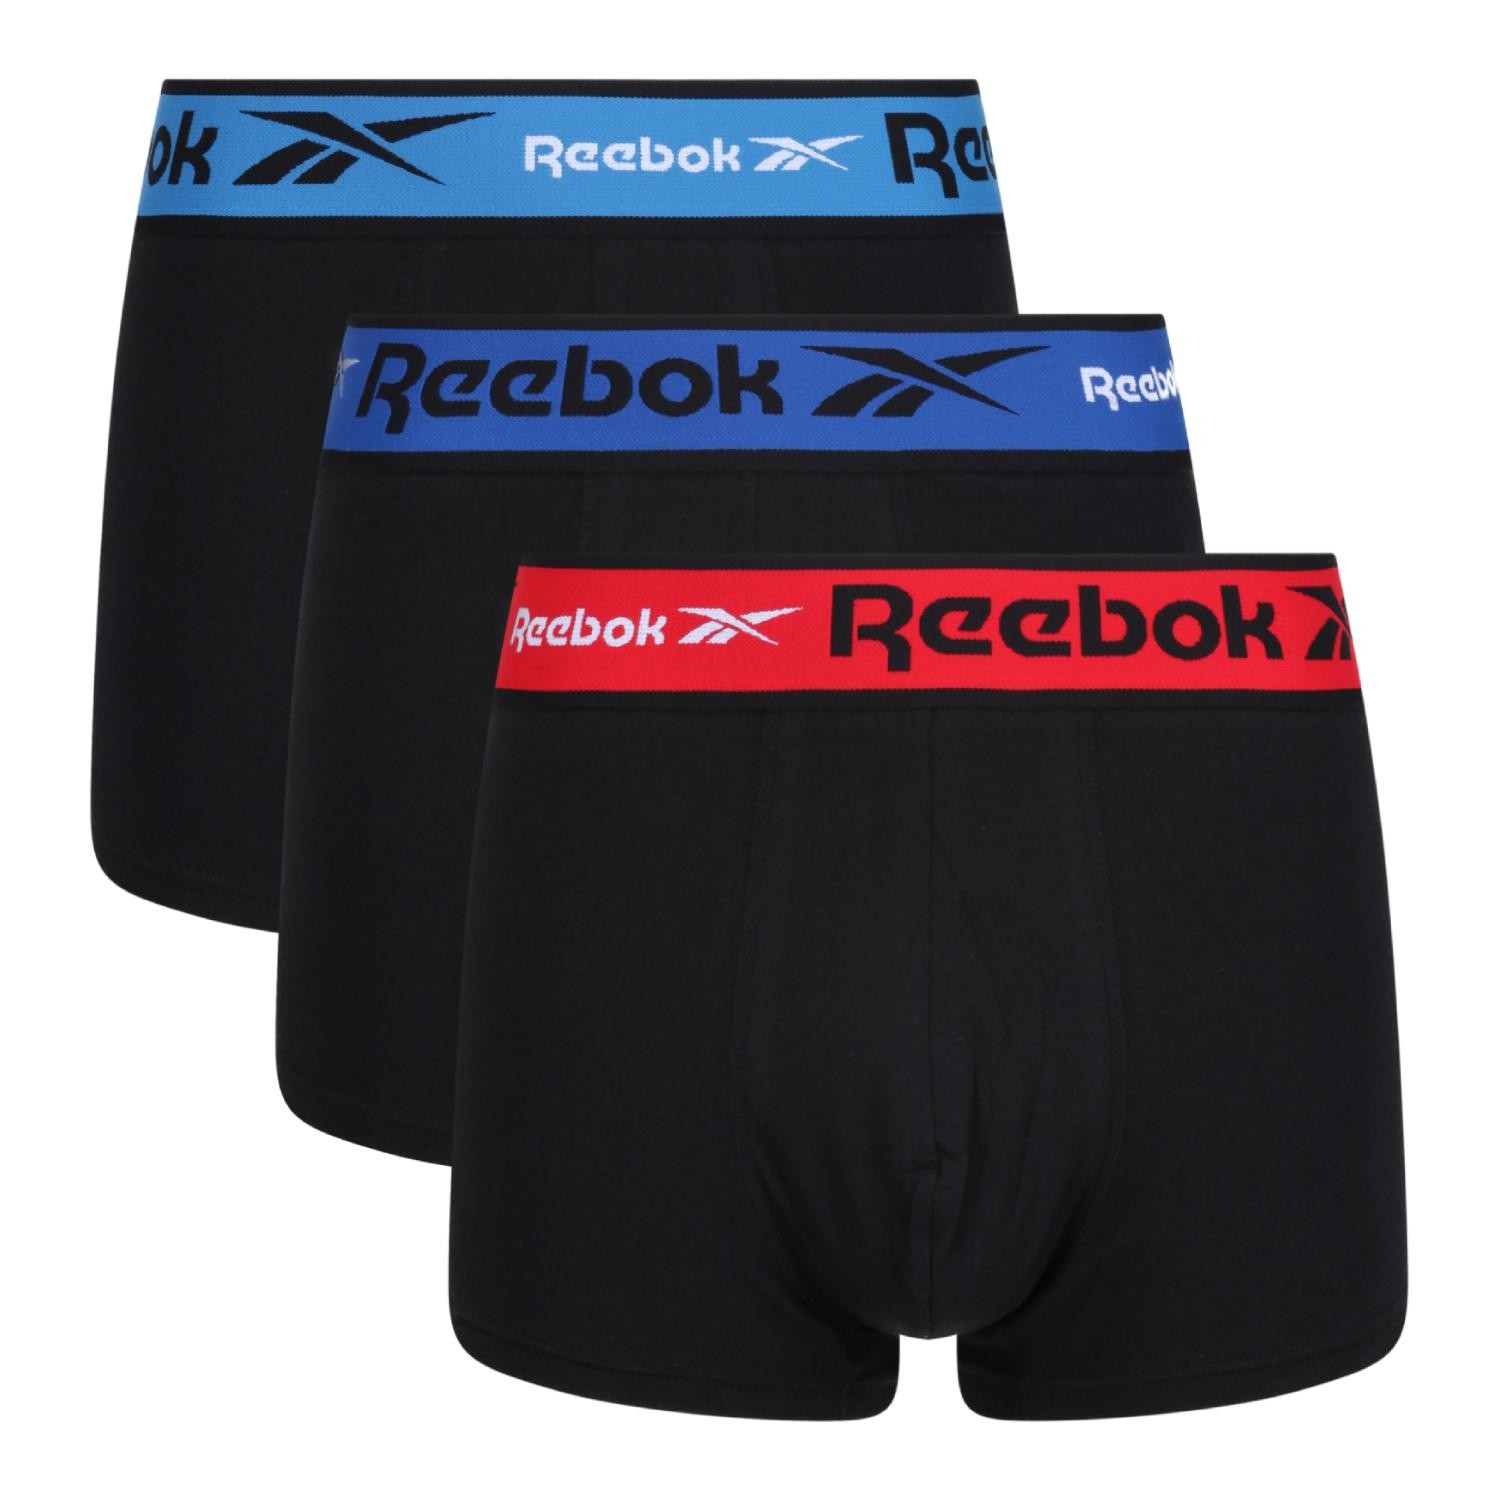 Reebok k Solid Men's Boxers U5_F8401_RBK 